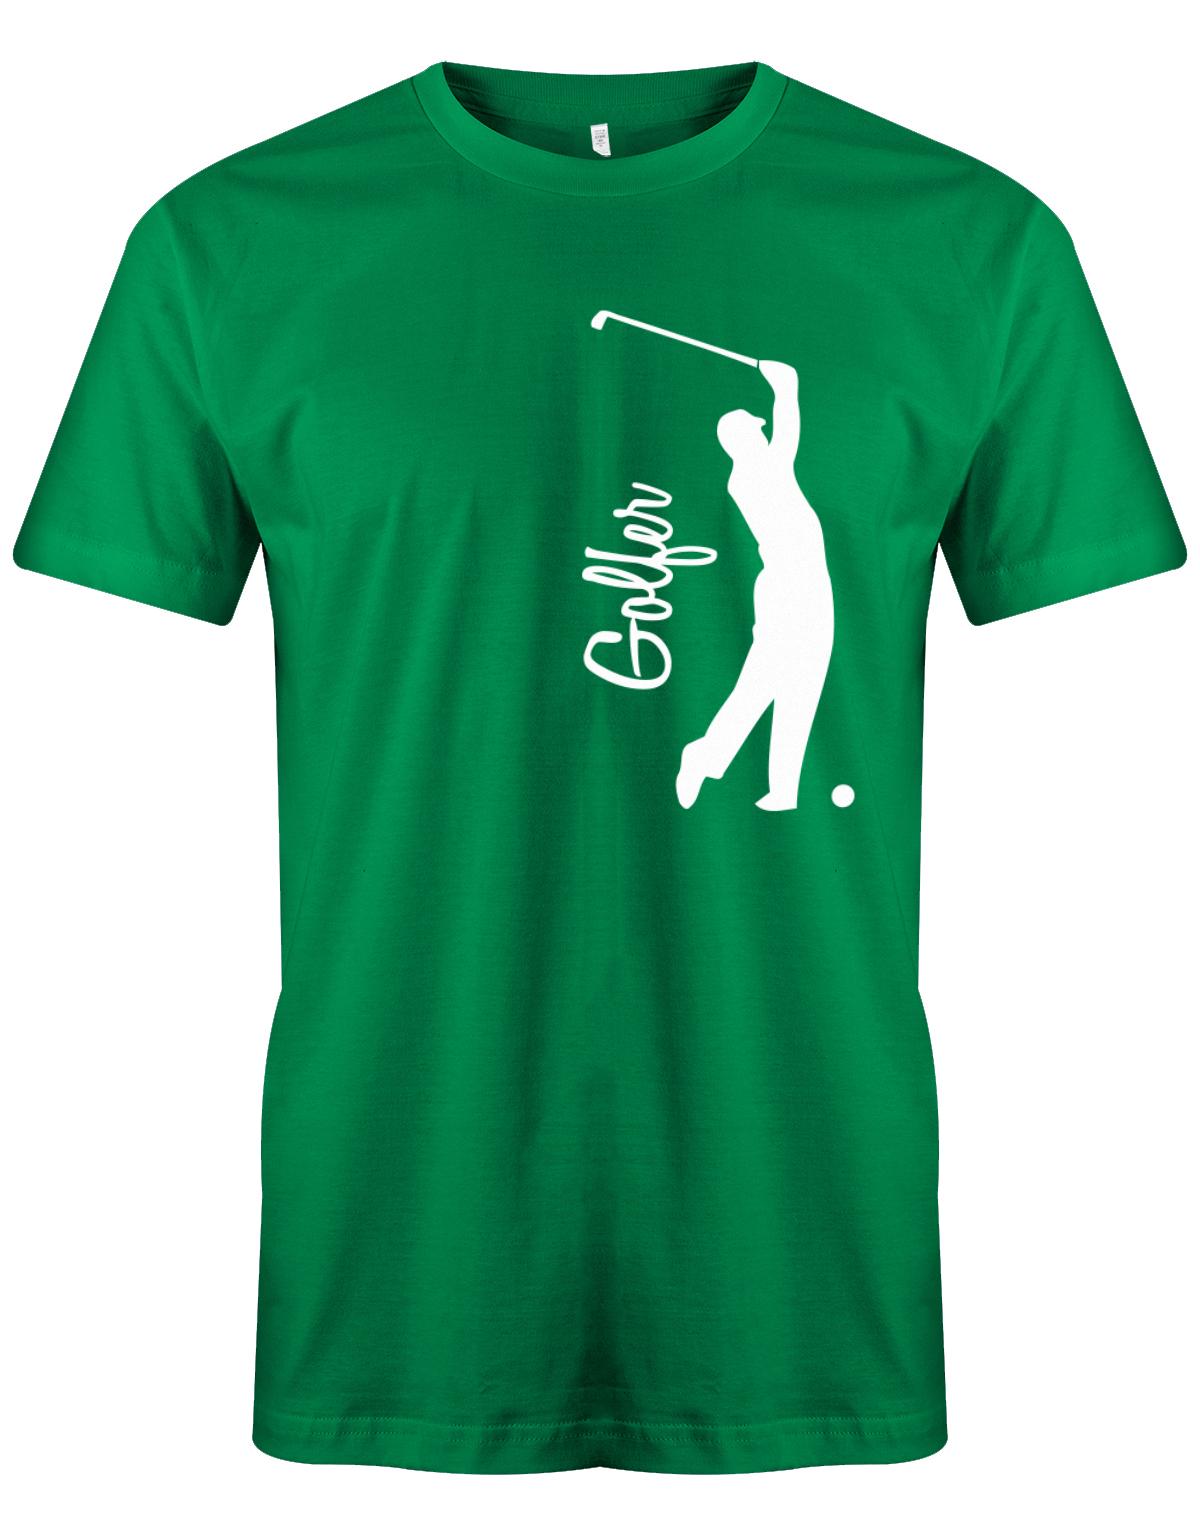 Golfer-Herren-Shirt-Gruen